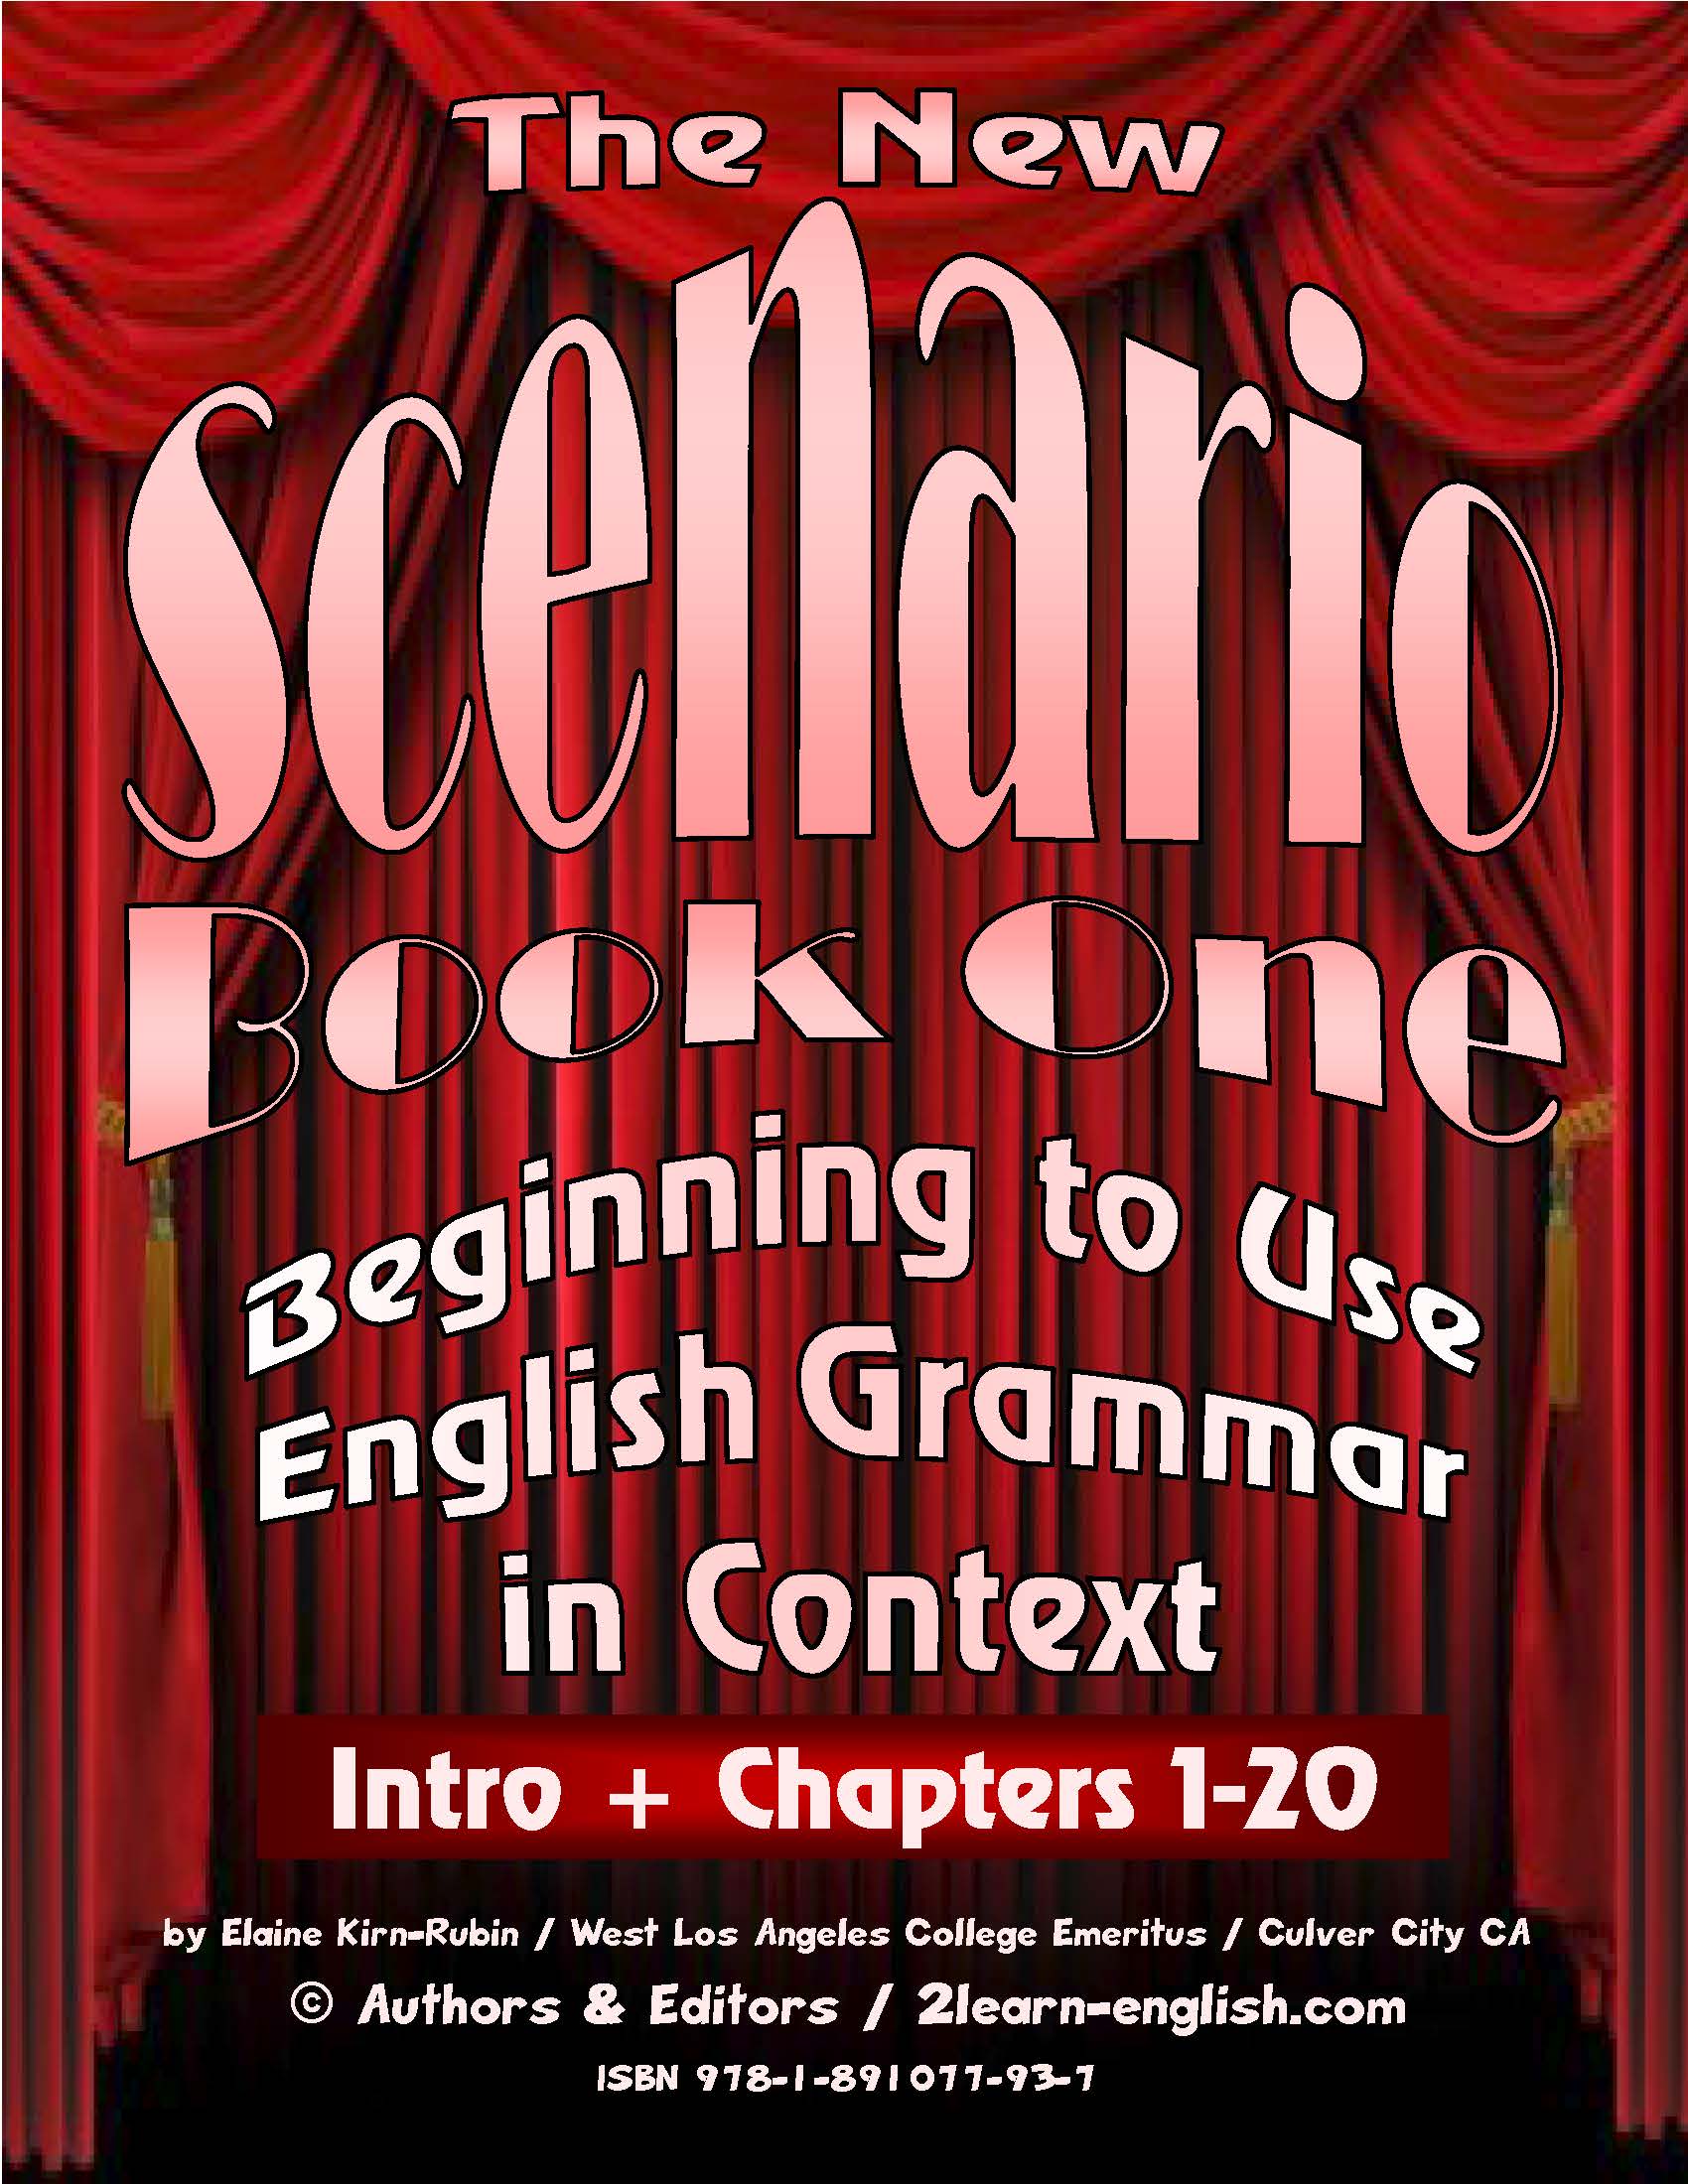 One:　Use　Grammar　Beginning　in　Scenario　English　–　English　Book　Context　to　Work/Life